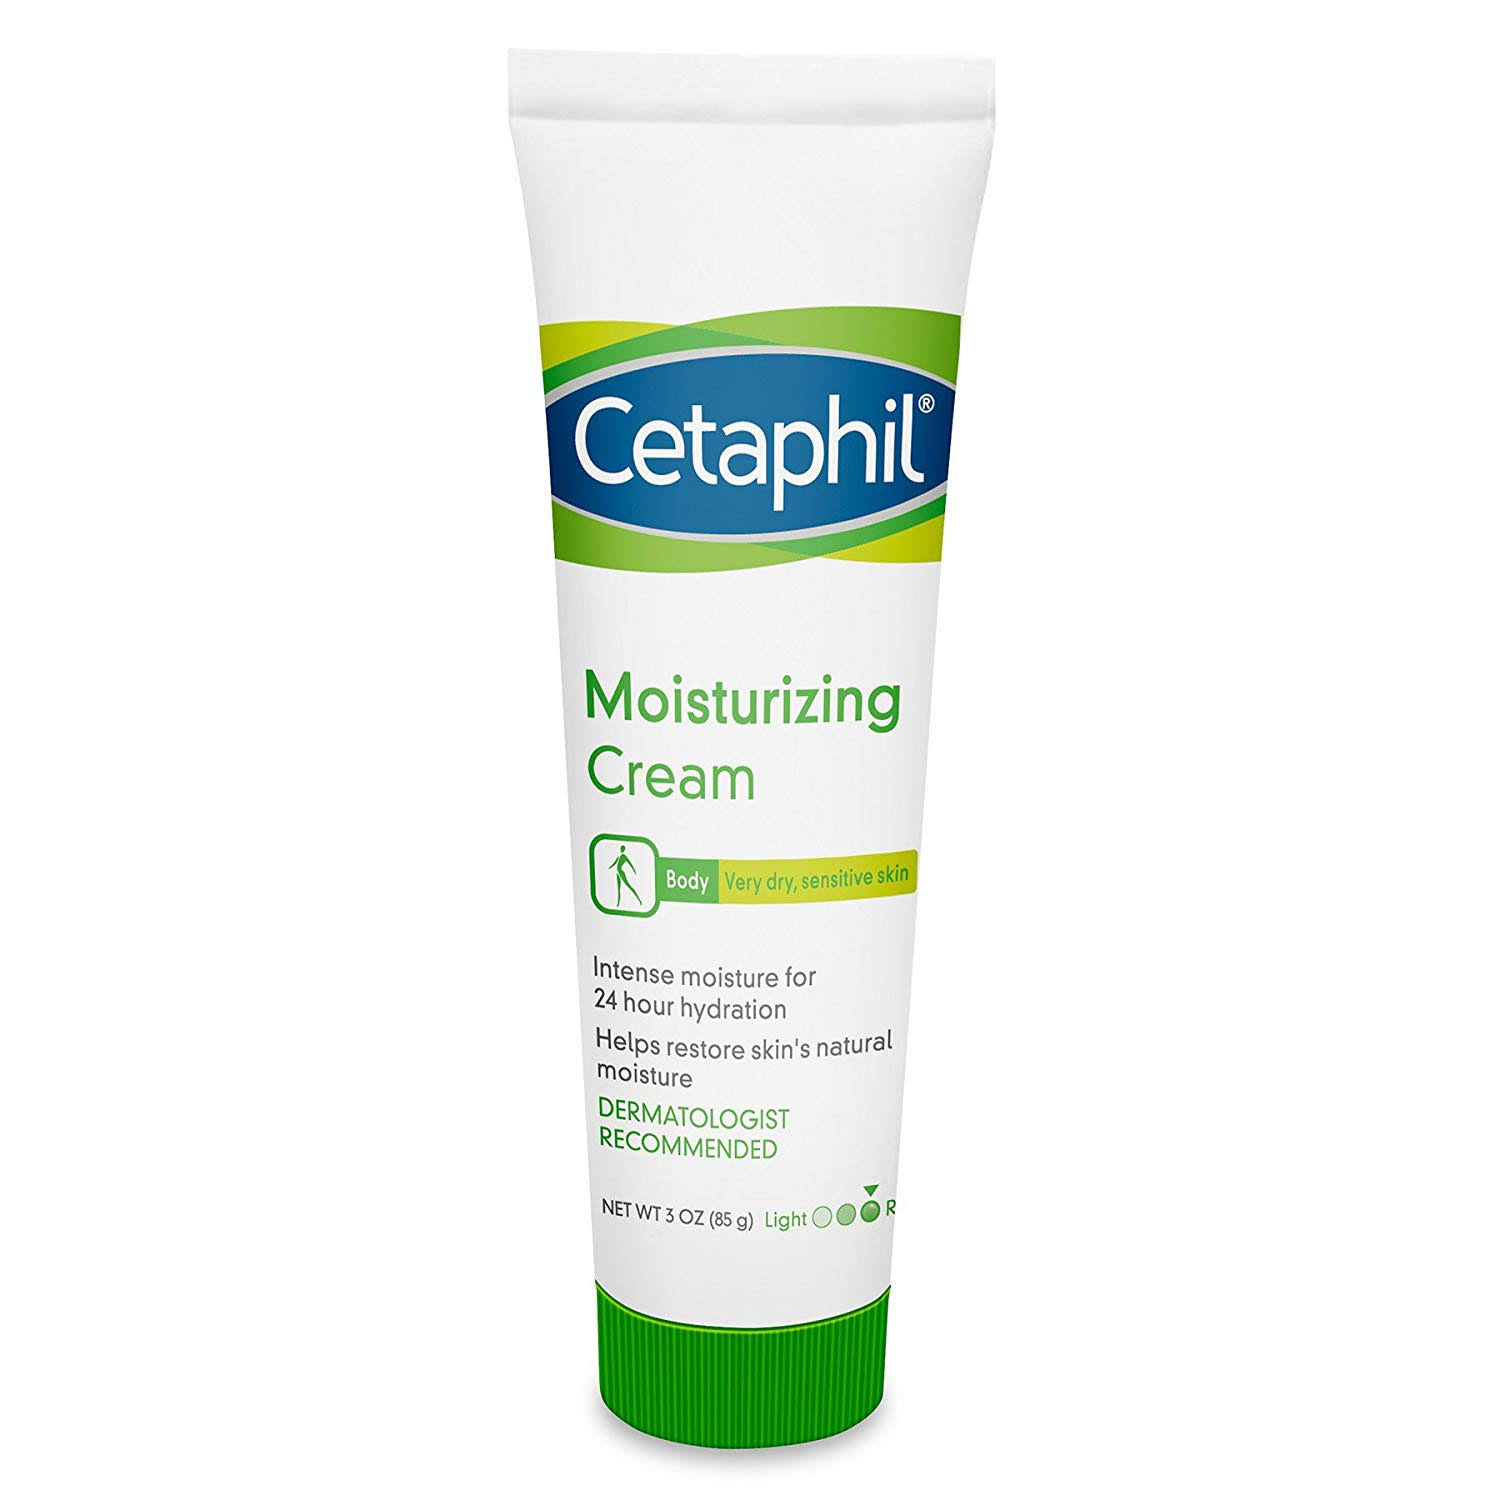 Cetaphil Moisturizing Cream - For Very Dry/Sensitive Skin, 3oz